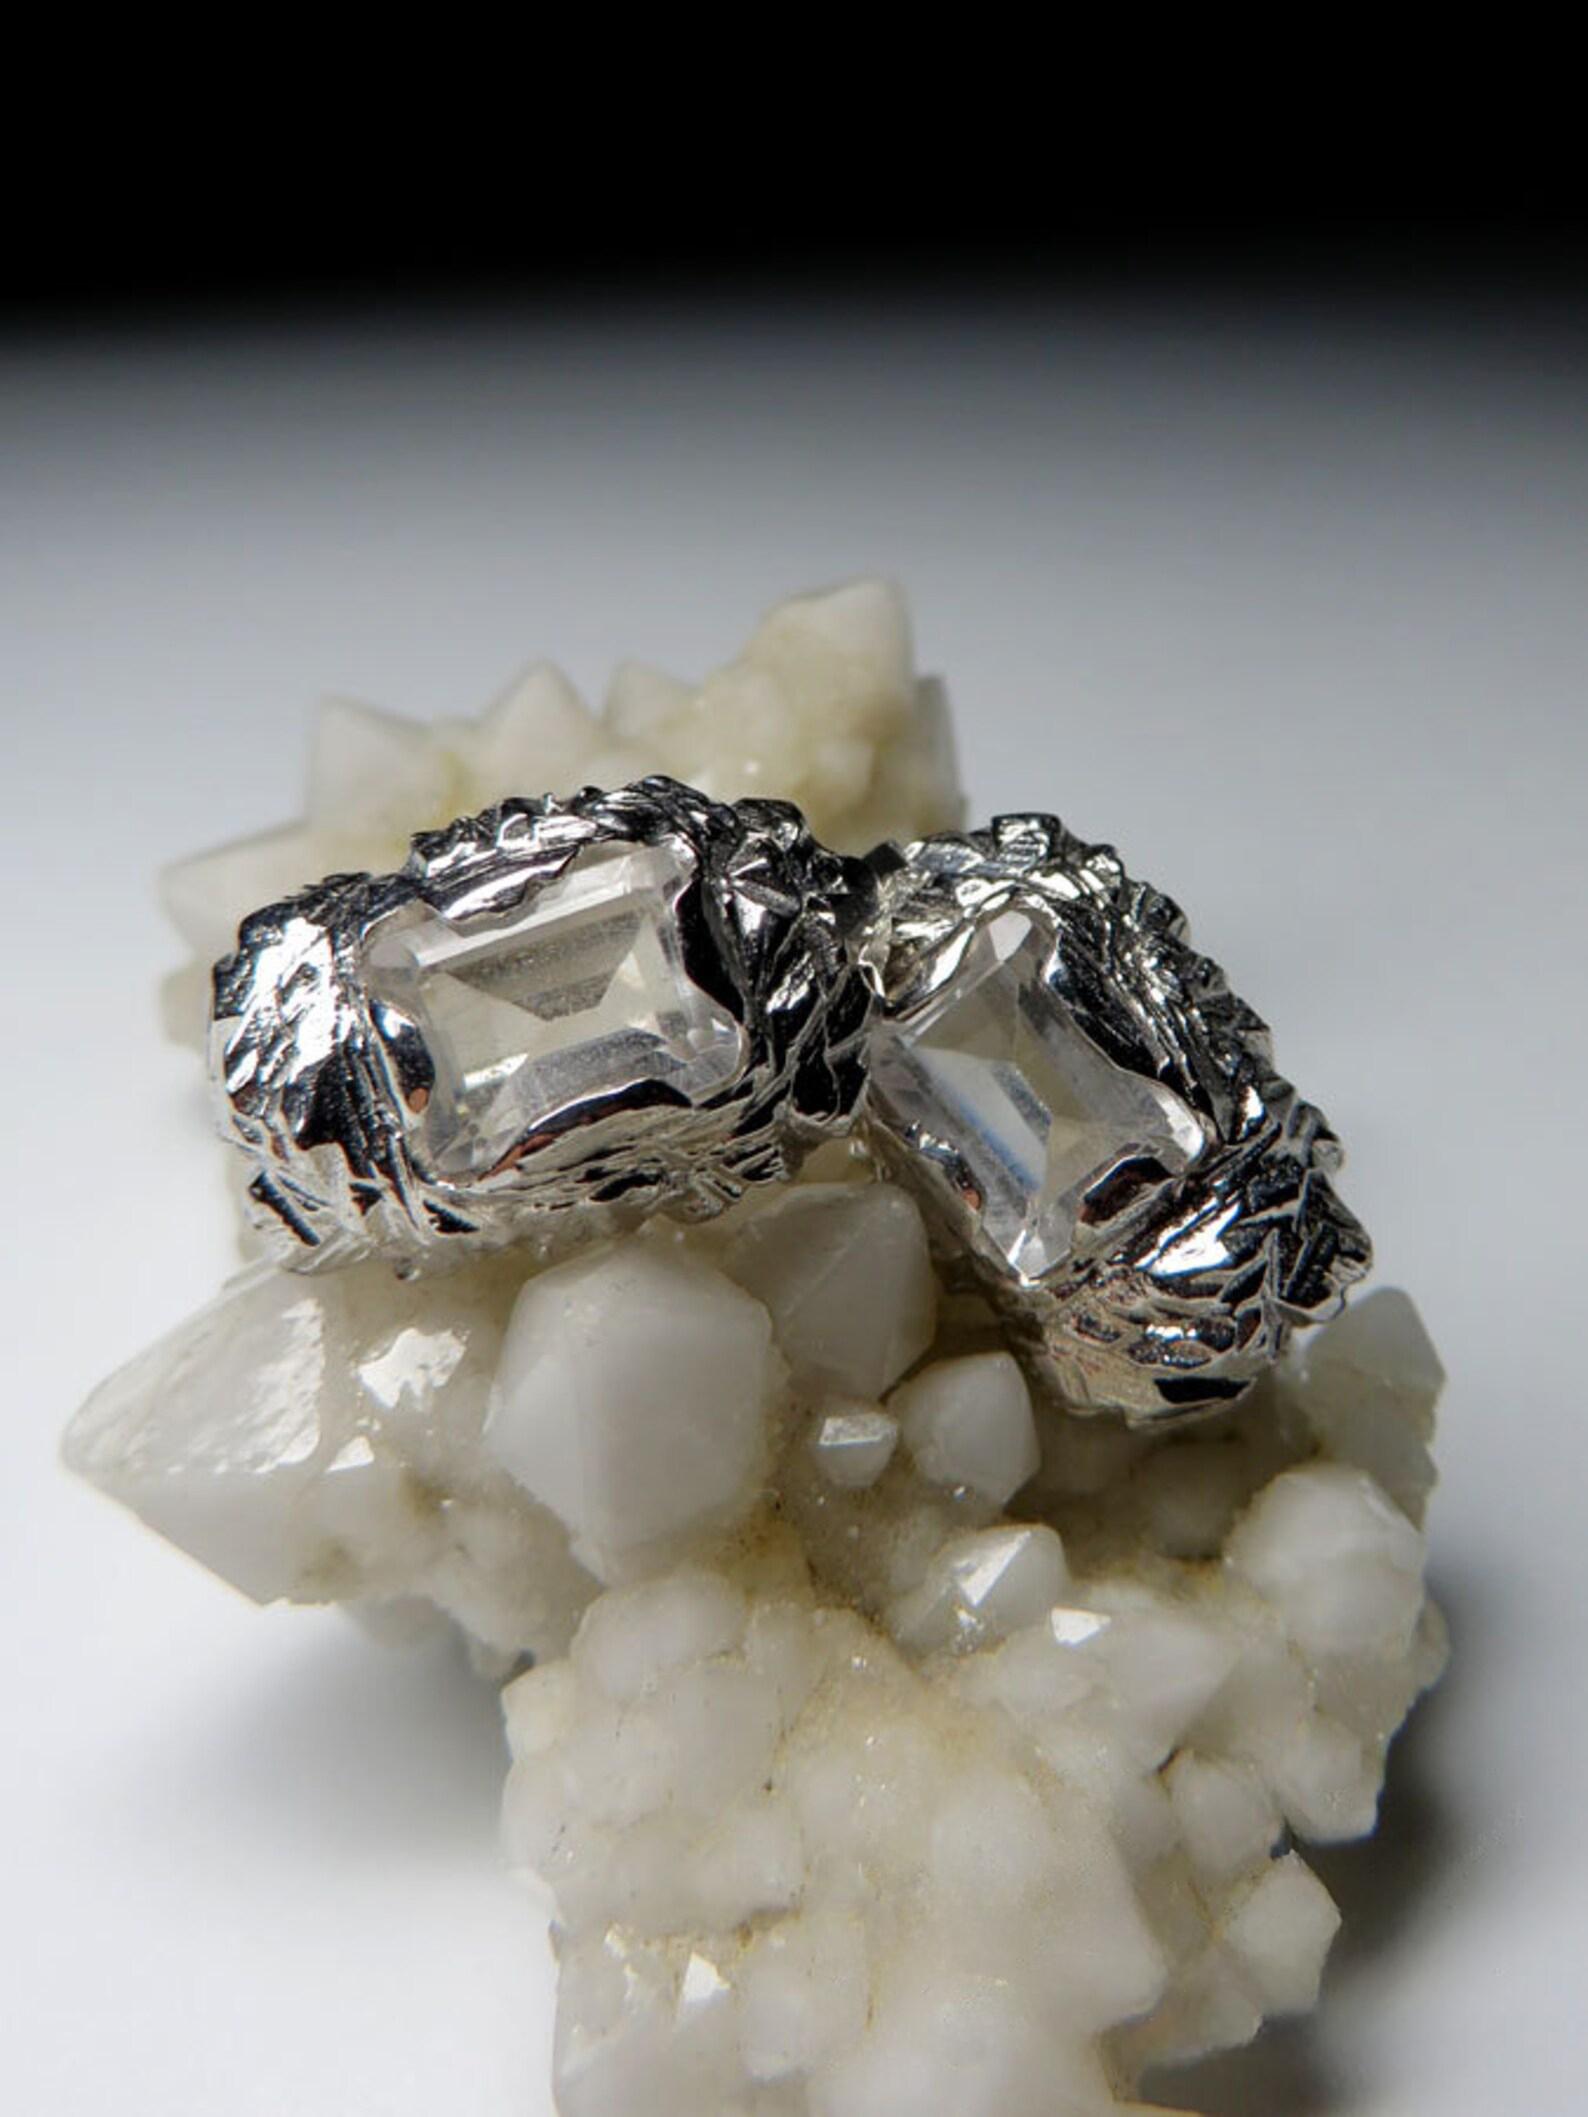 Silver earrings with natural Rock Crystal fantasy octagon cut
rock crystal origin - Brazil
stone measurements - 0.12 х 0.24 х 0.31 in / 3 х 6 х 8 mm
stone weight - 2.77 carats
earrings weight - 7.86 grams
earrings height - 0.59 in / 15 mm